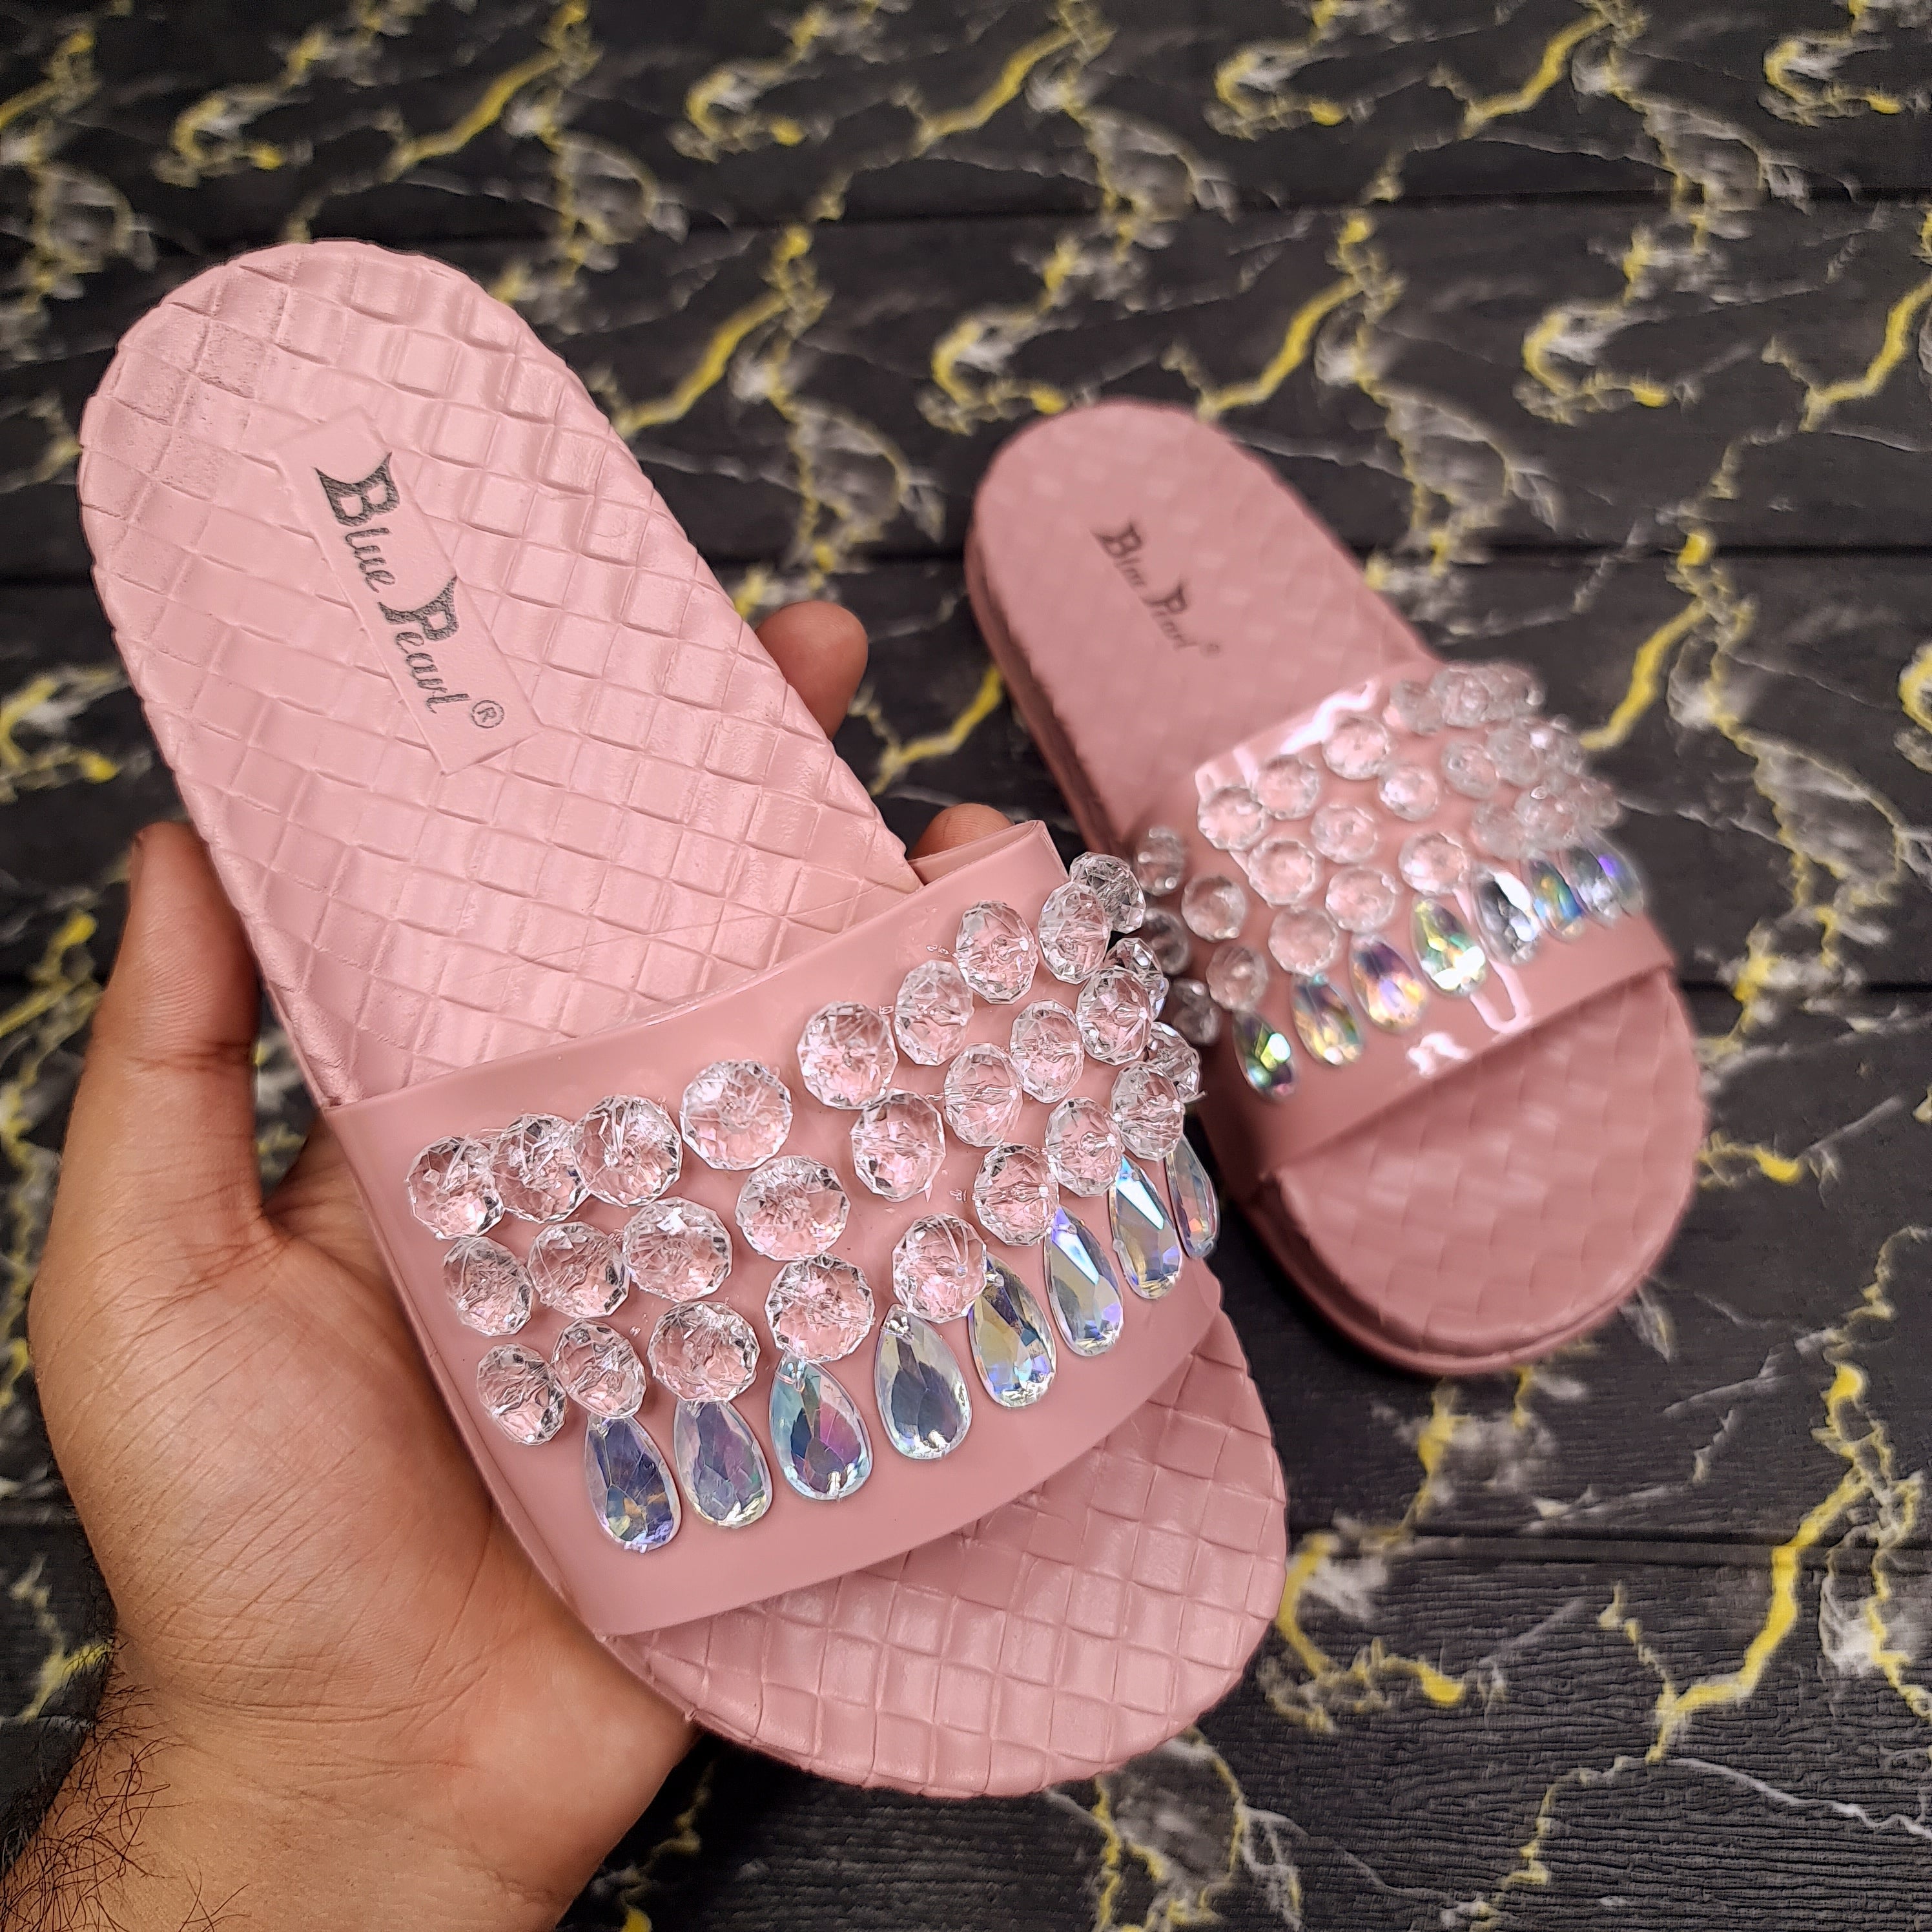 Pink & Grey Casual Slippers - Maha fashions -  Women's Footwear